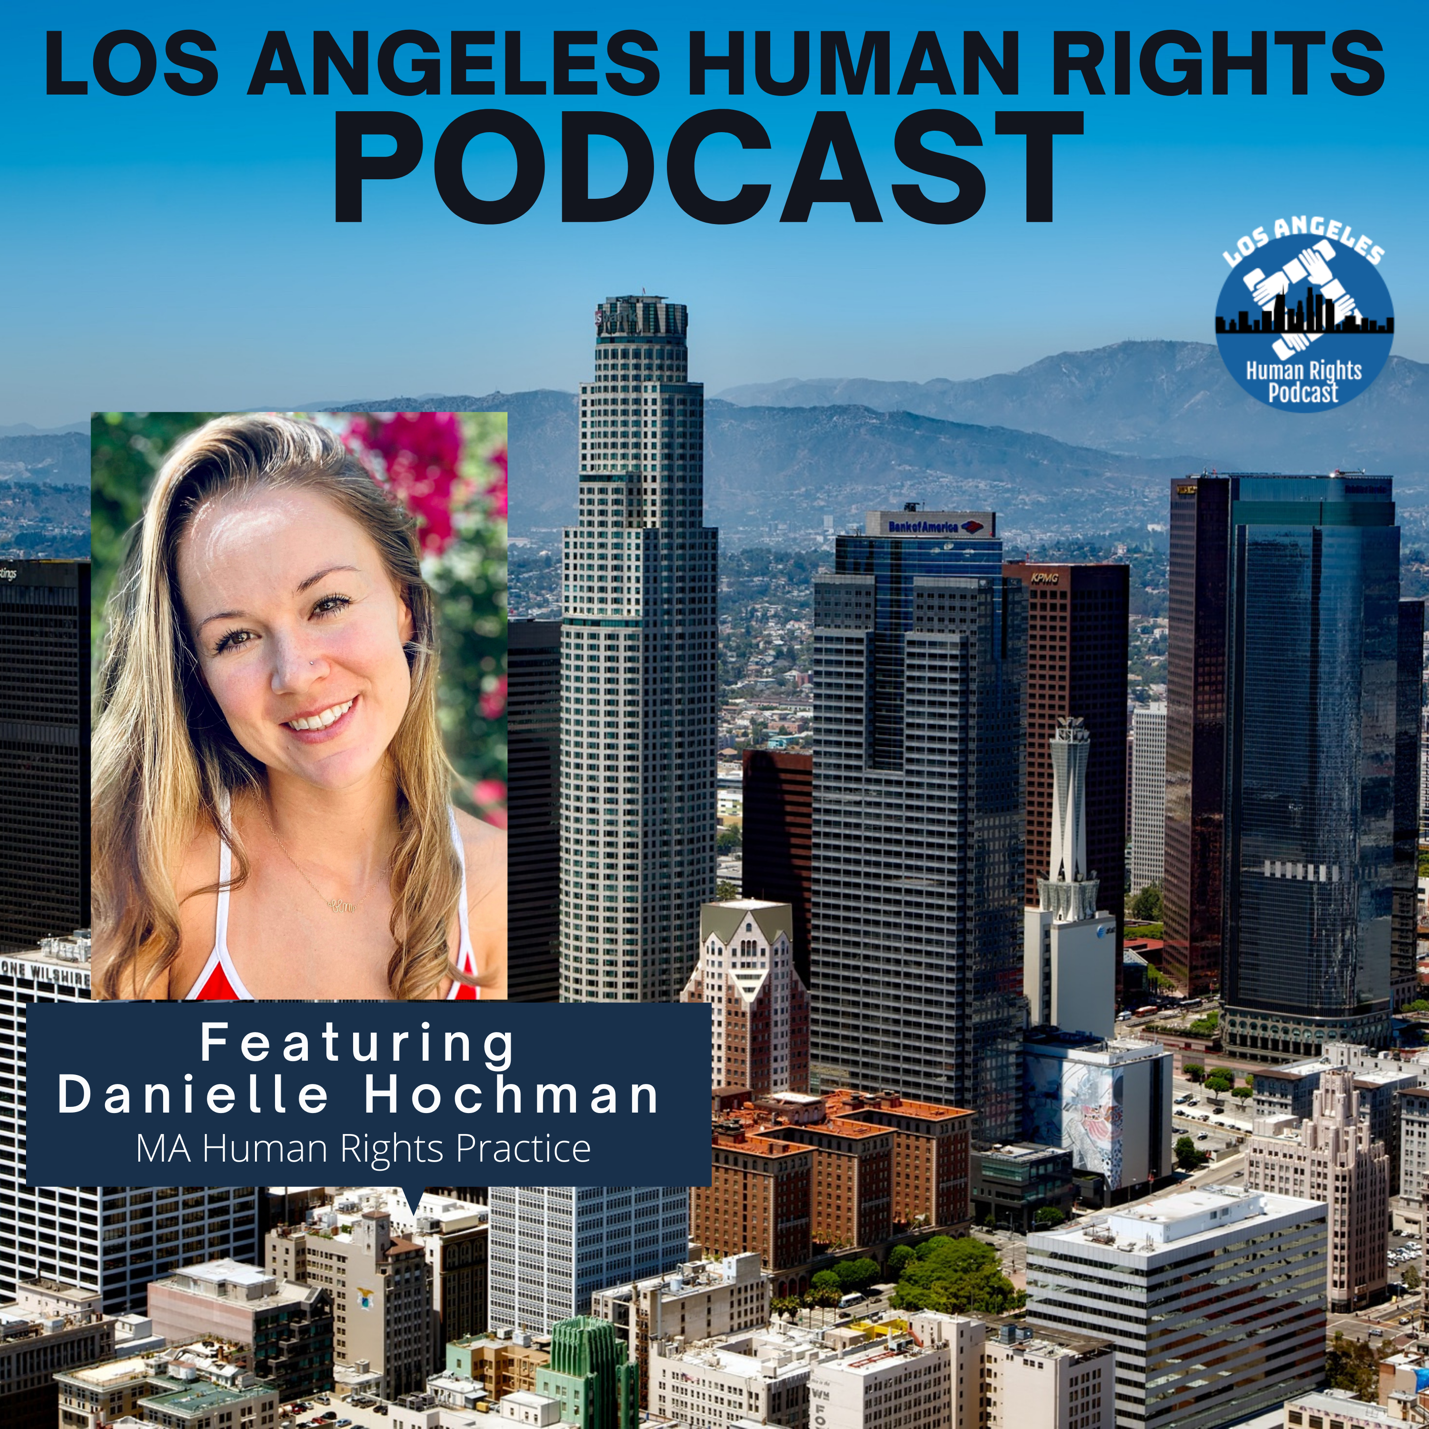 The LA Human Rights Podcast